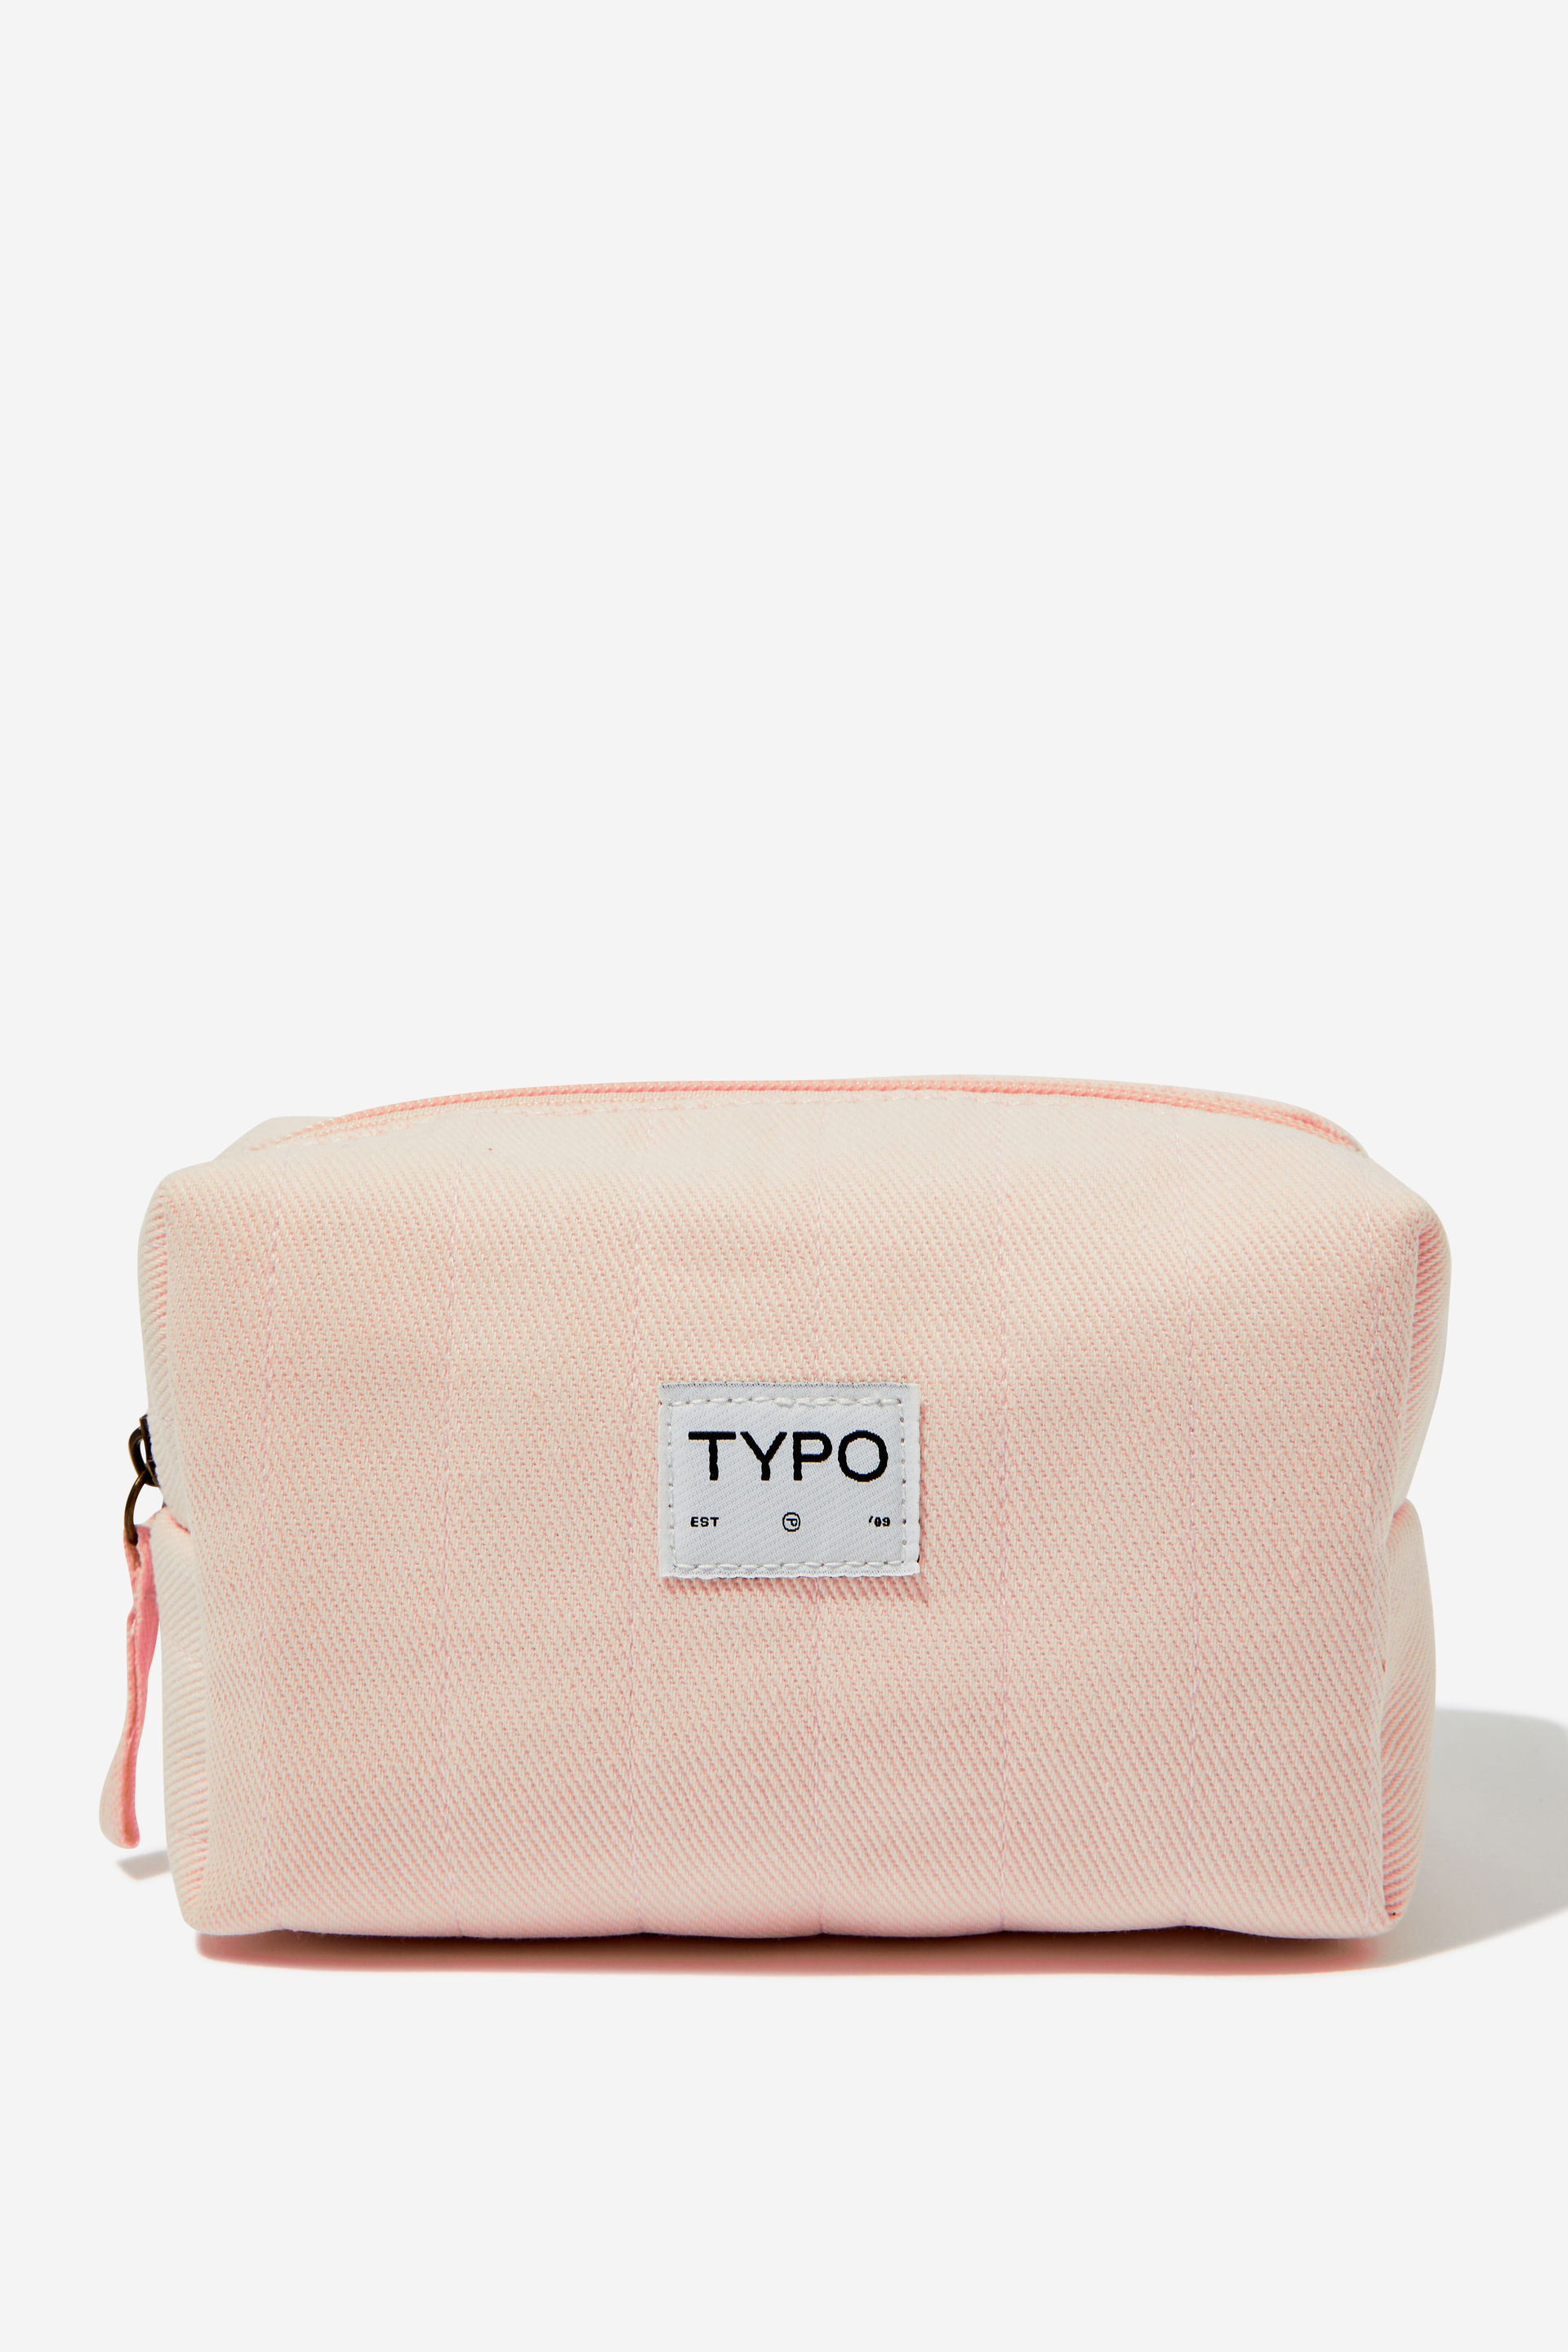 Typo - Florence Pencil Case - Ballet blush